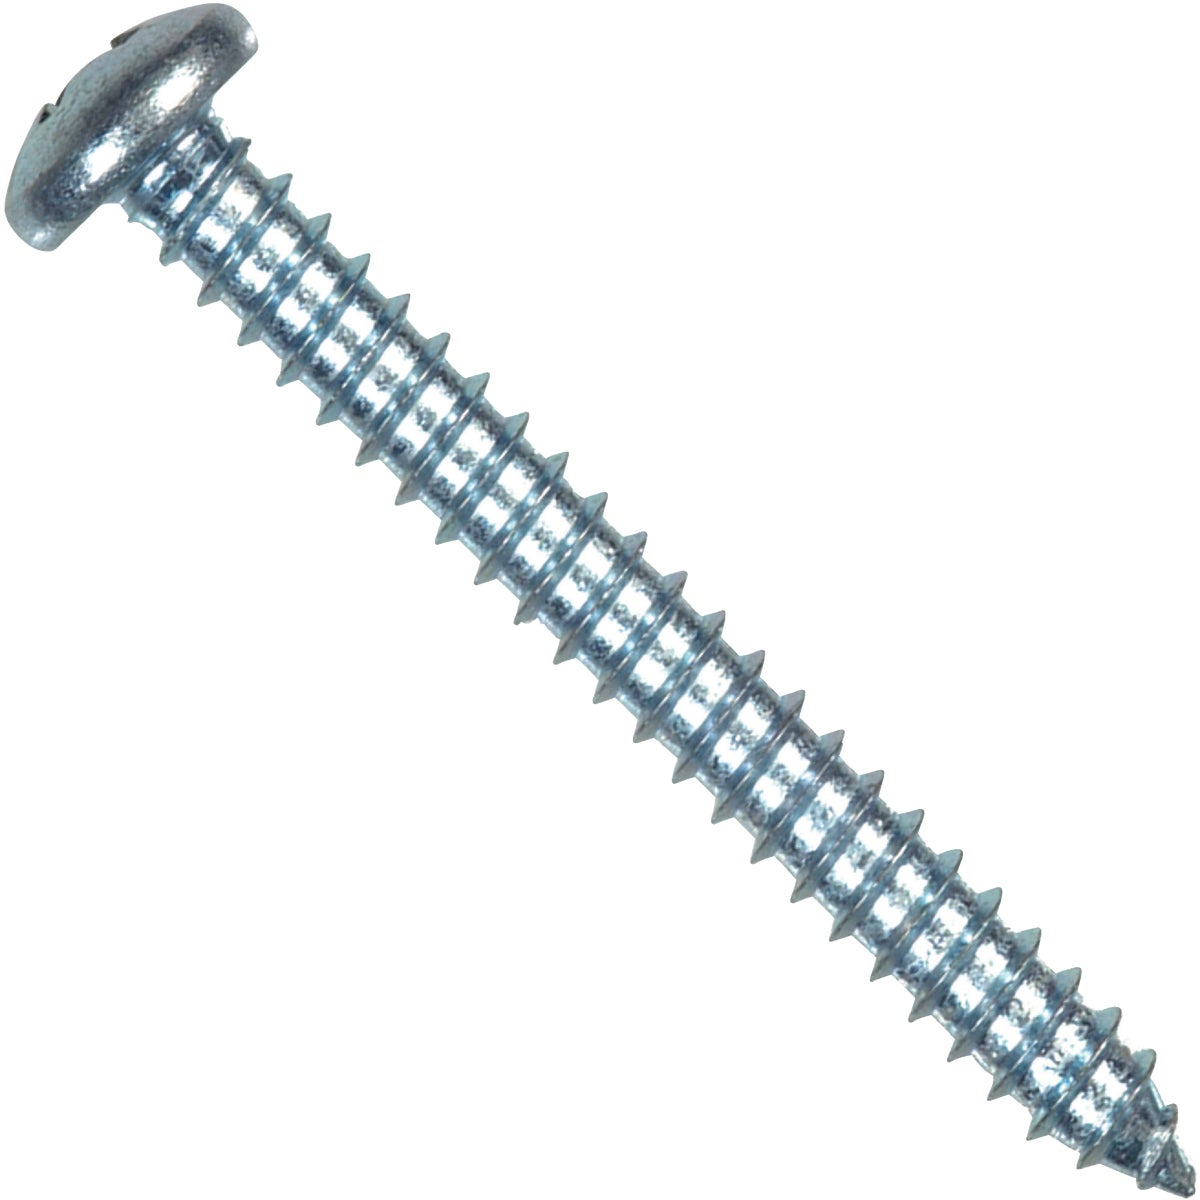 Item 727761, Pan combination head sheet metal screw.